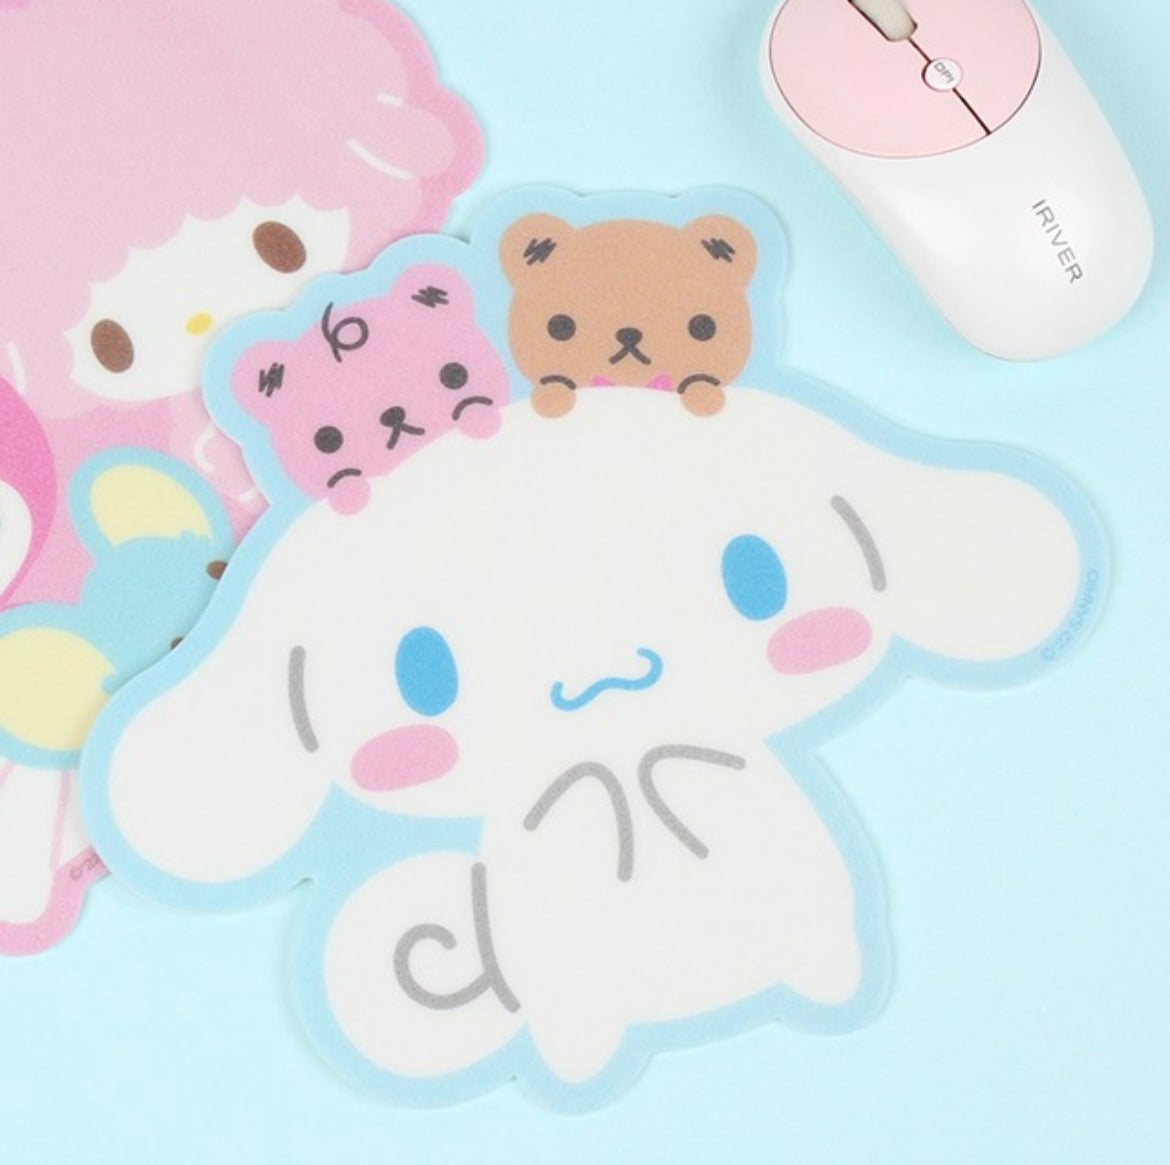 Sanrio mouse pad